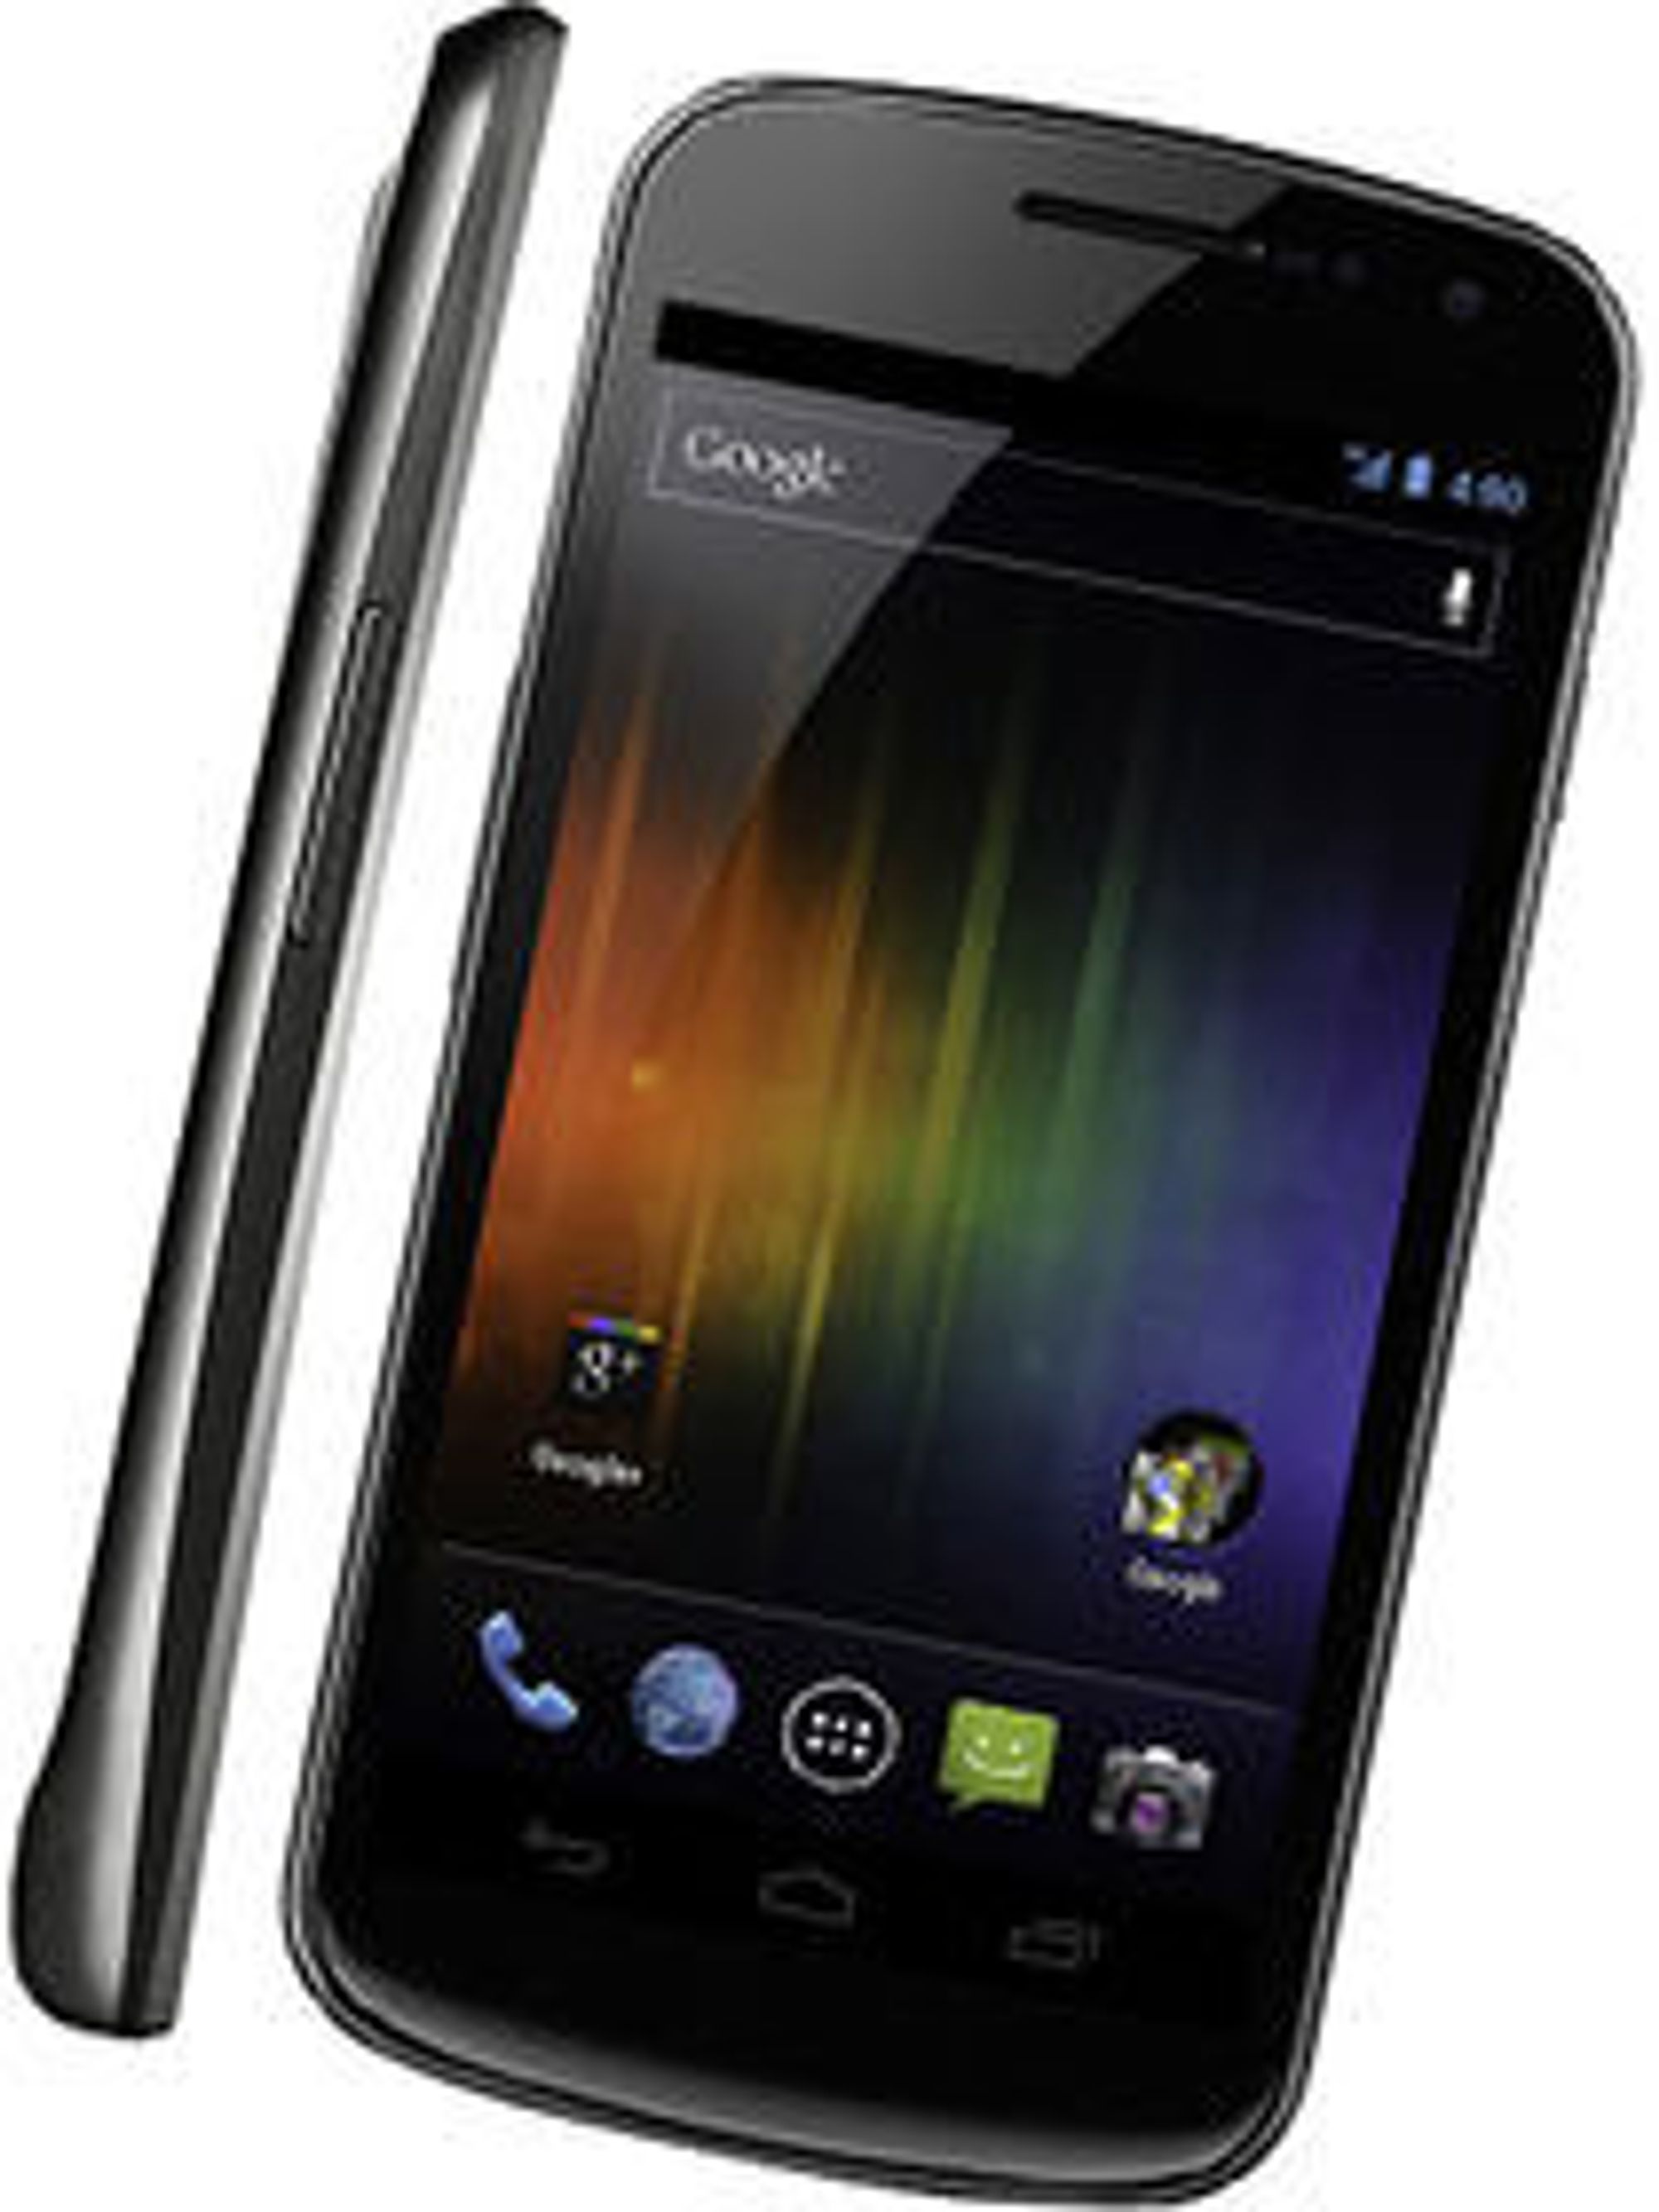 Den hittil siste Nexus-mobilen, Samsung Galaxy Nexus.